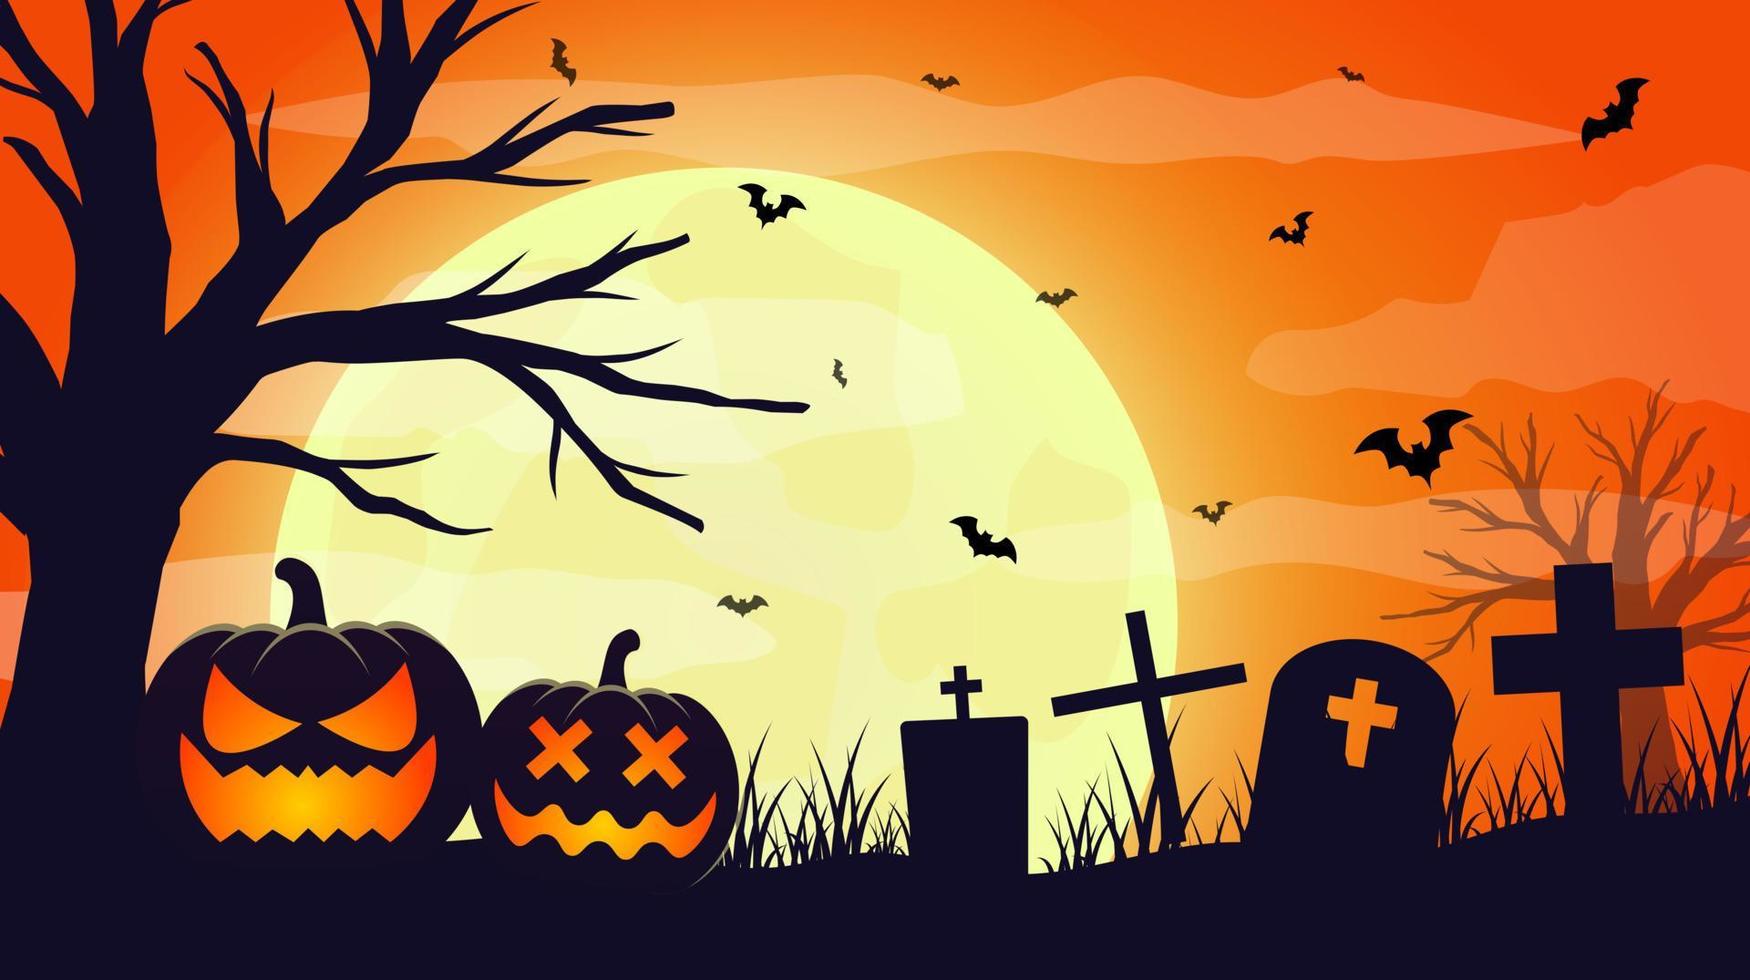 fondo de noche de halloween con siluetas de calabazas de halloween, murciélagos, tumbas en luna llena. ilustración de halloween sobre fondo naranja vector